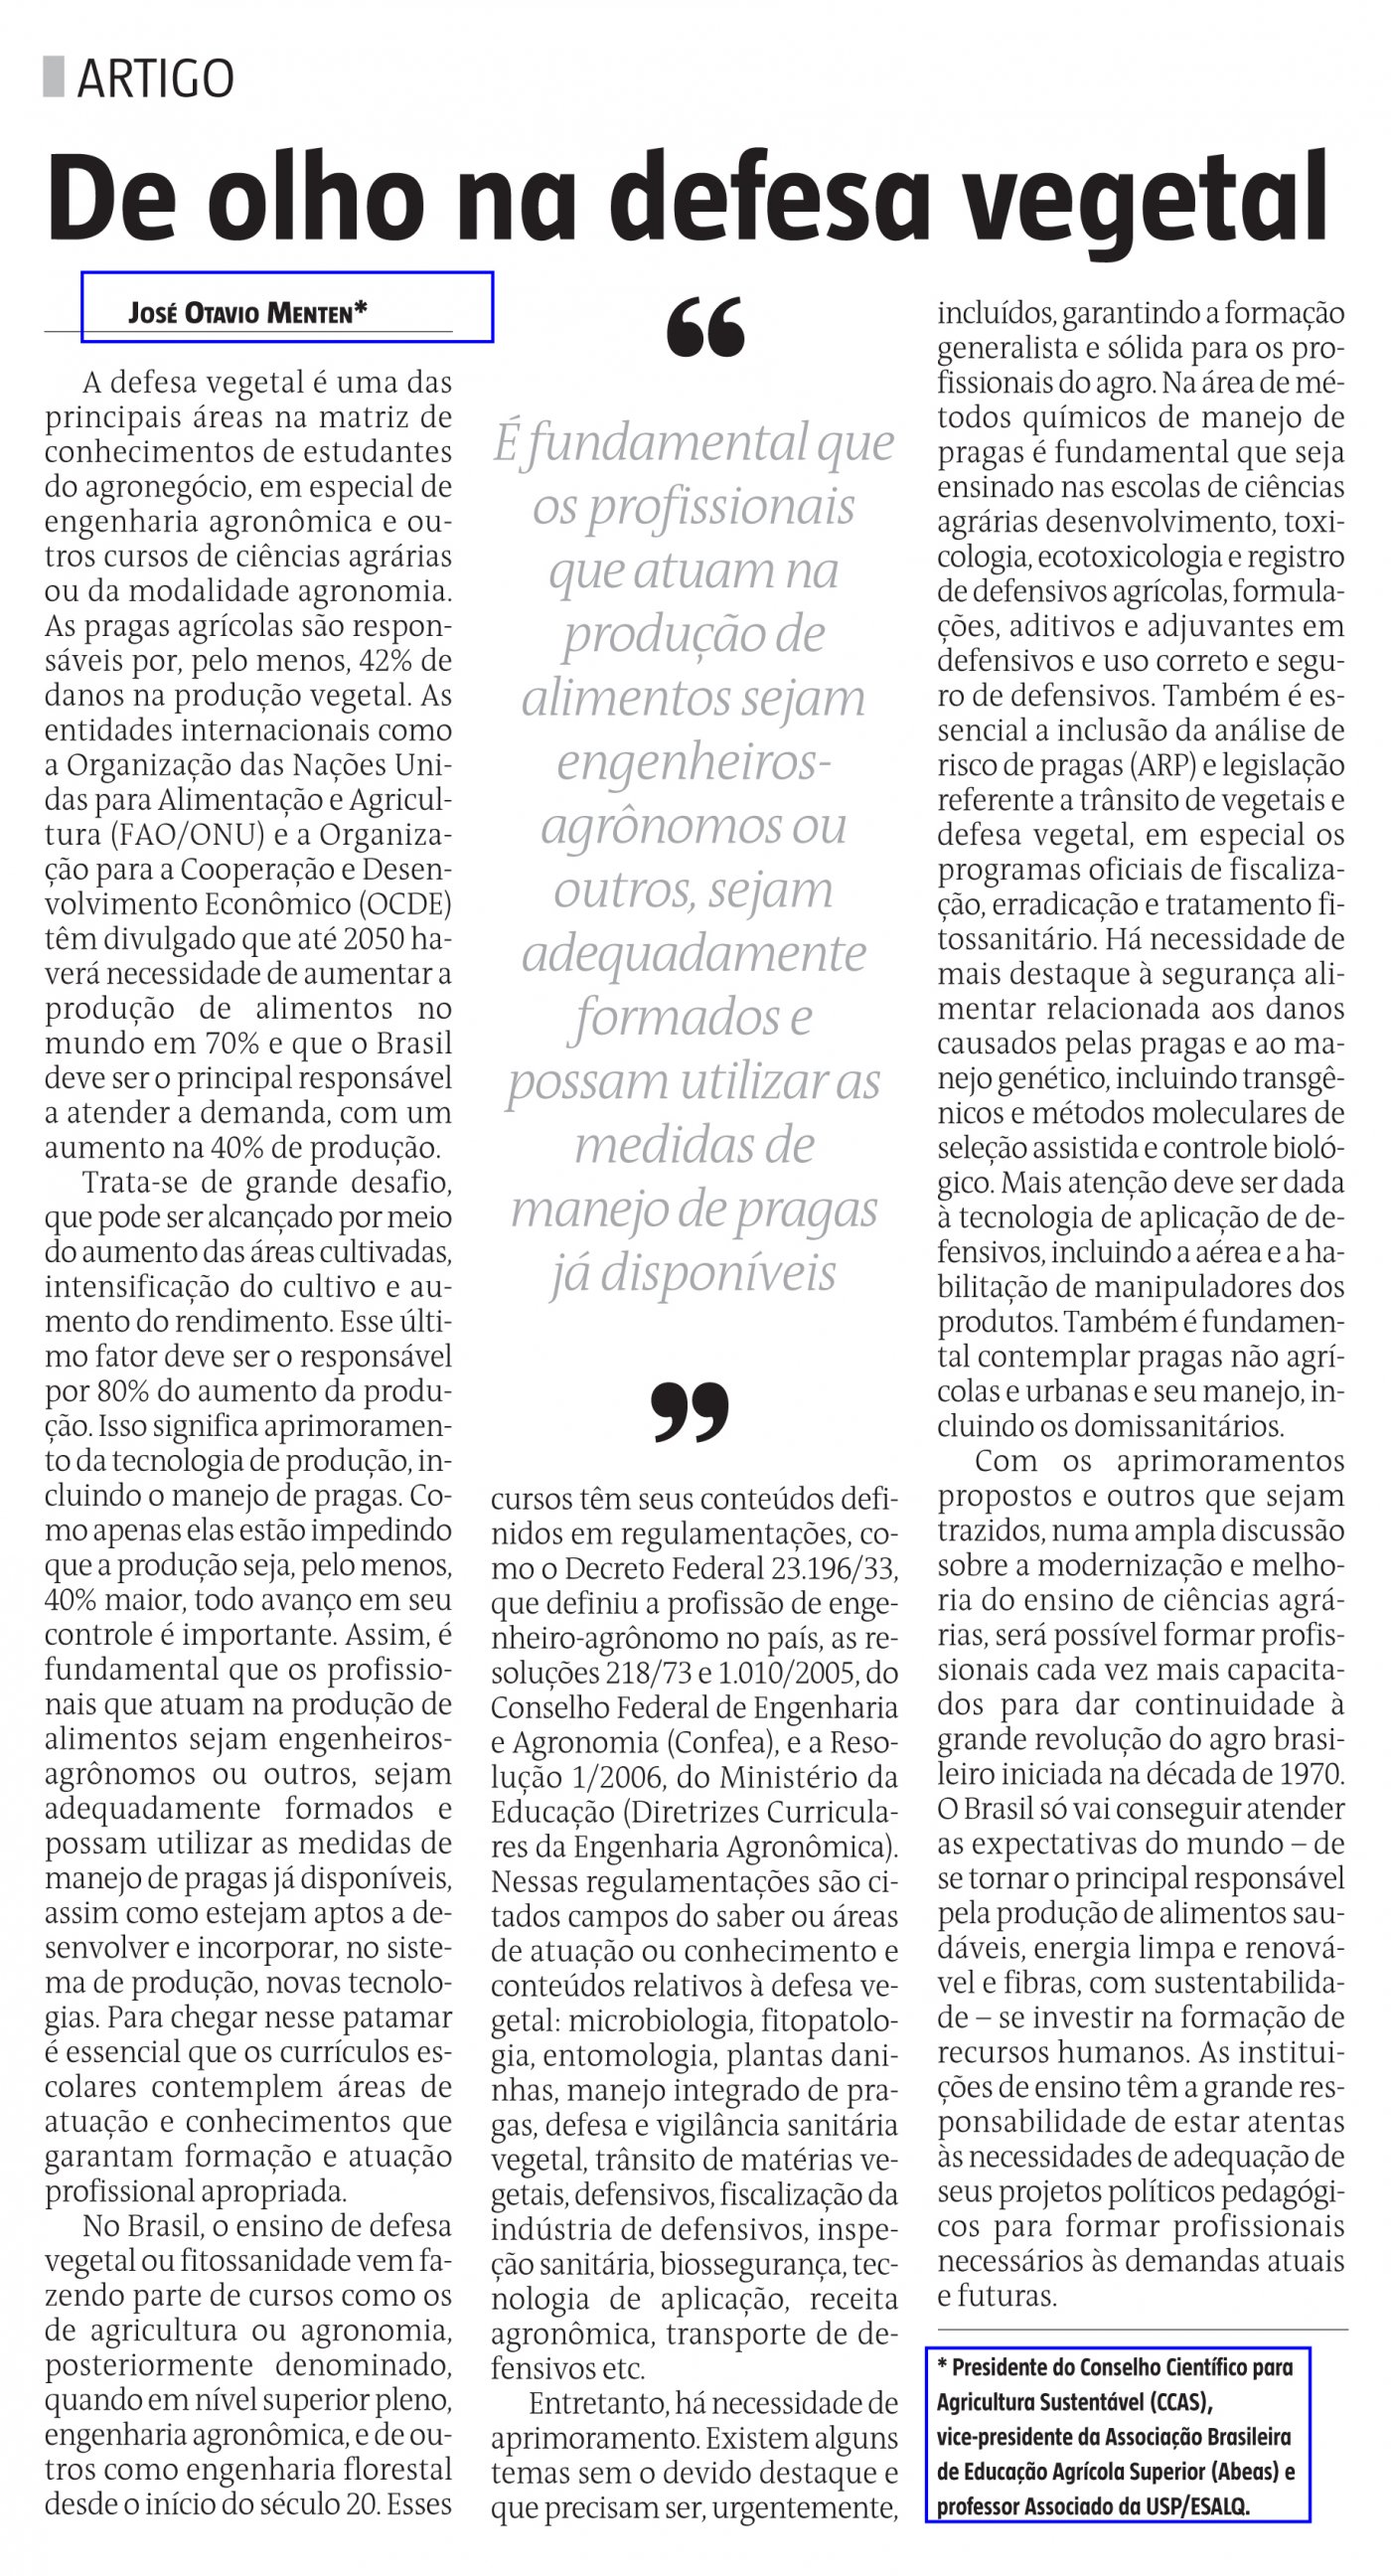 Jornal O Estado de MG publica artigo do presidente José Otávio Menten